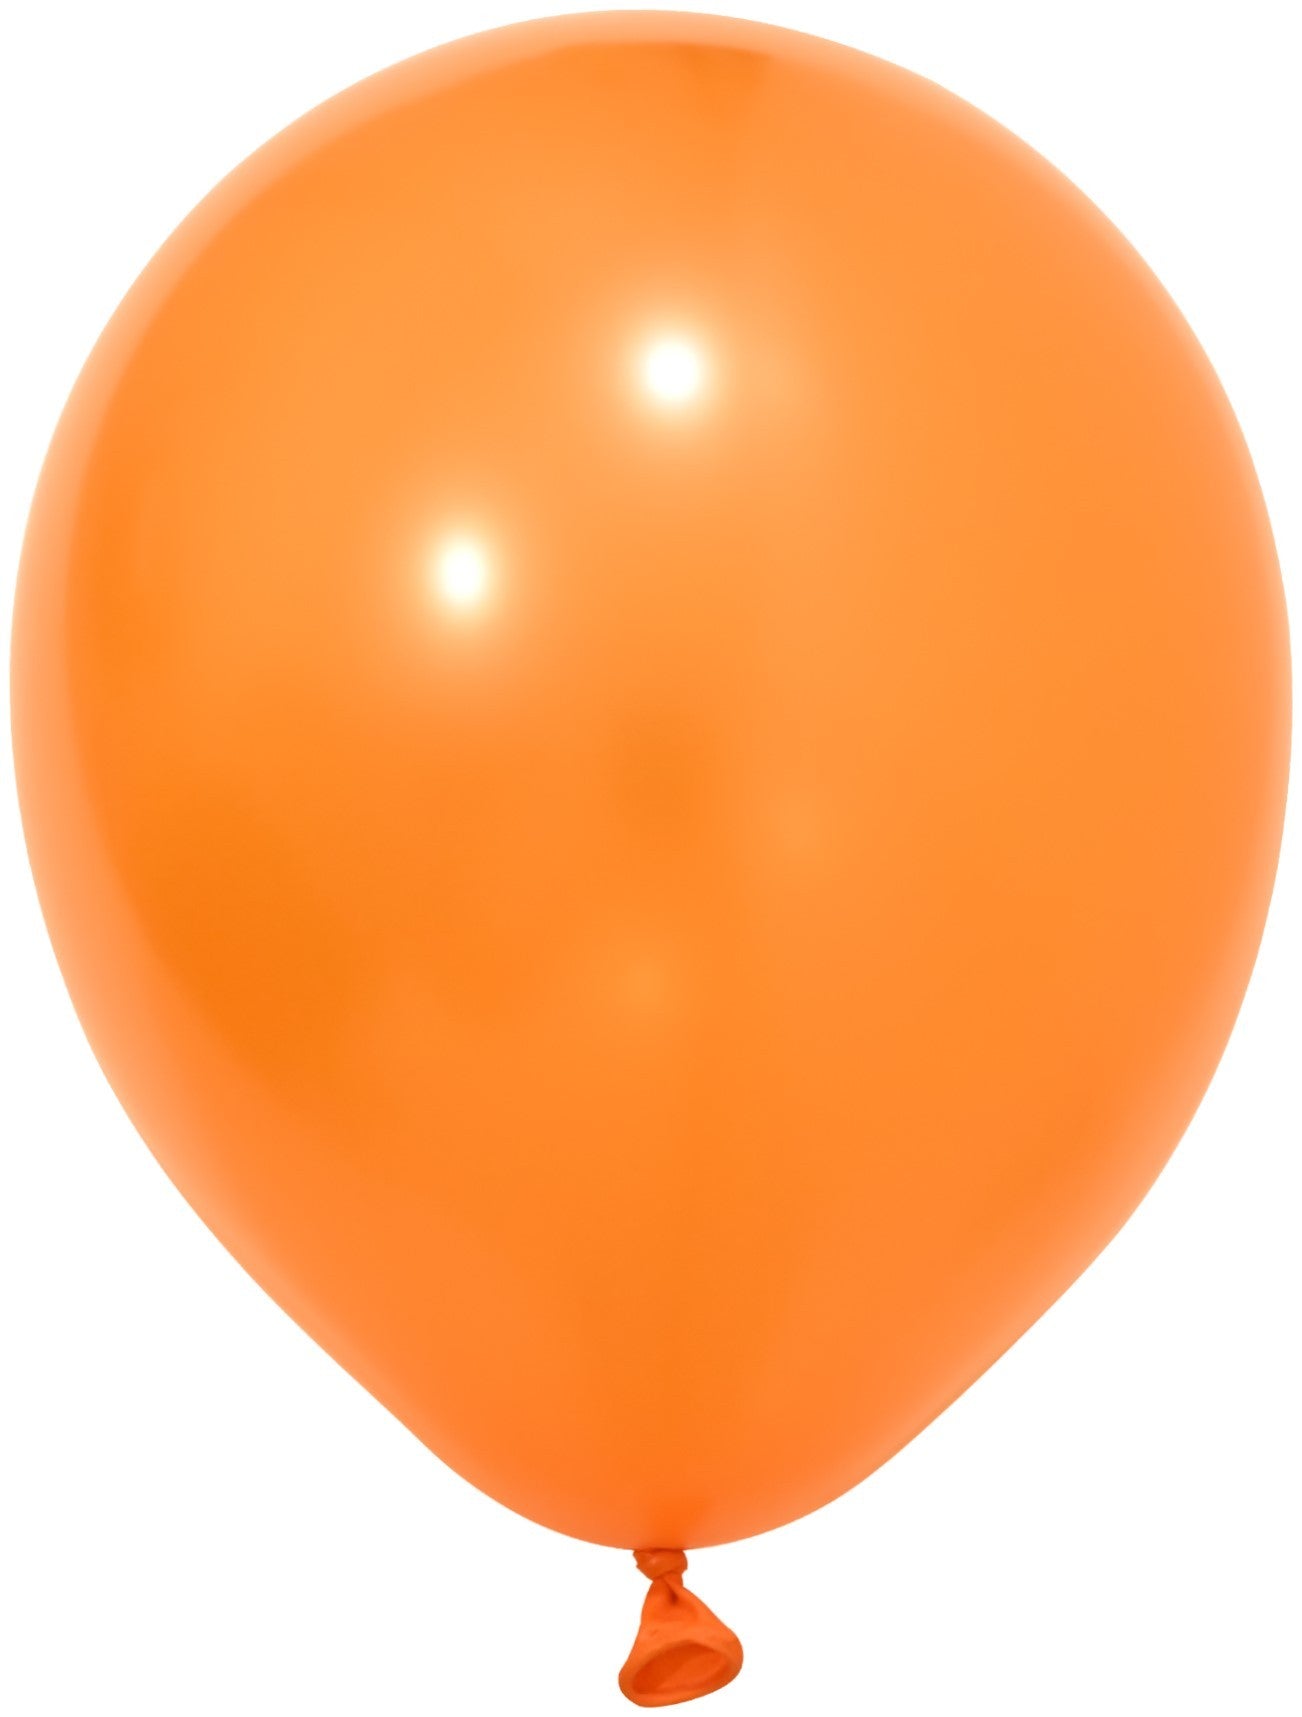 View Orange Metallic Latex Balloon 10inch Pack of 100 information